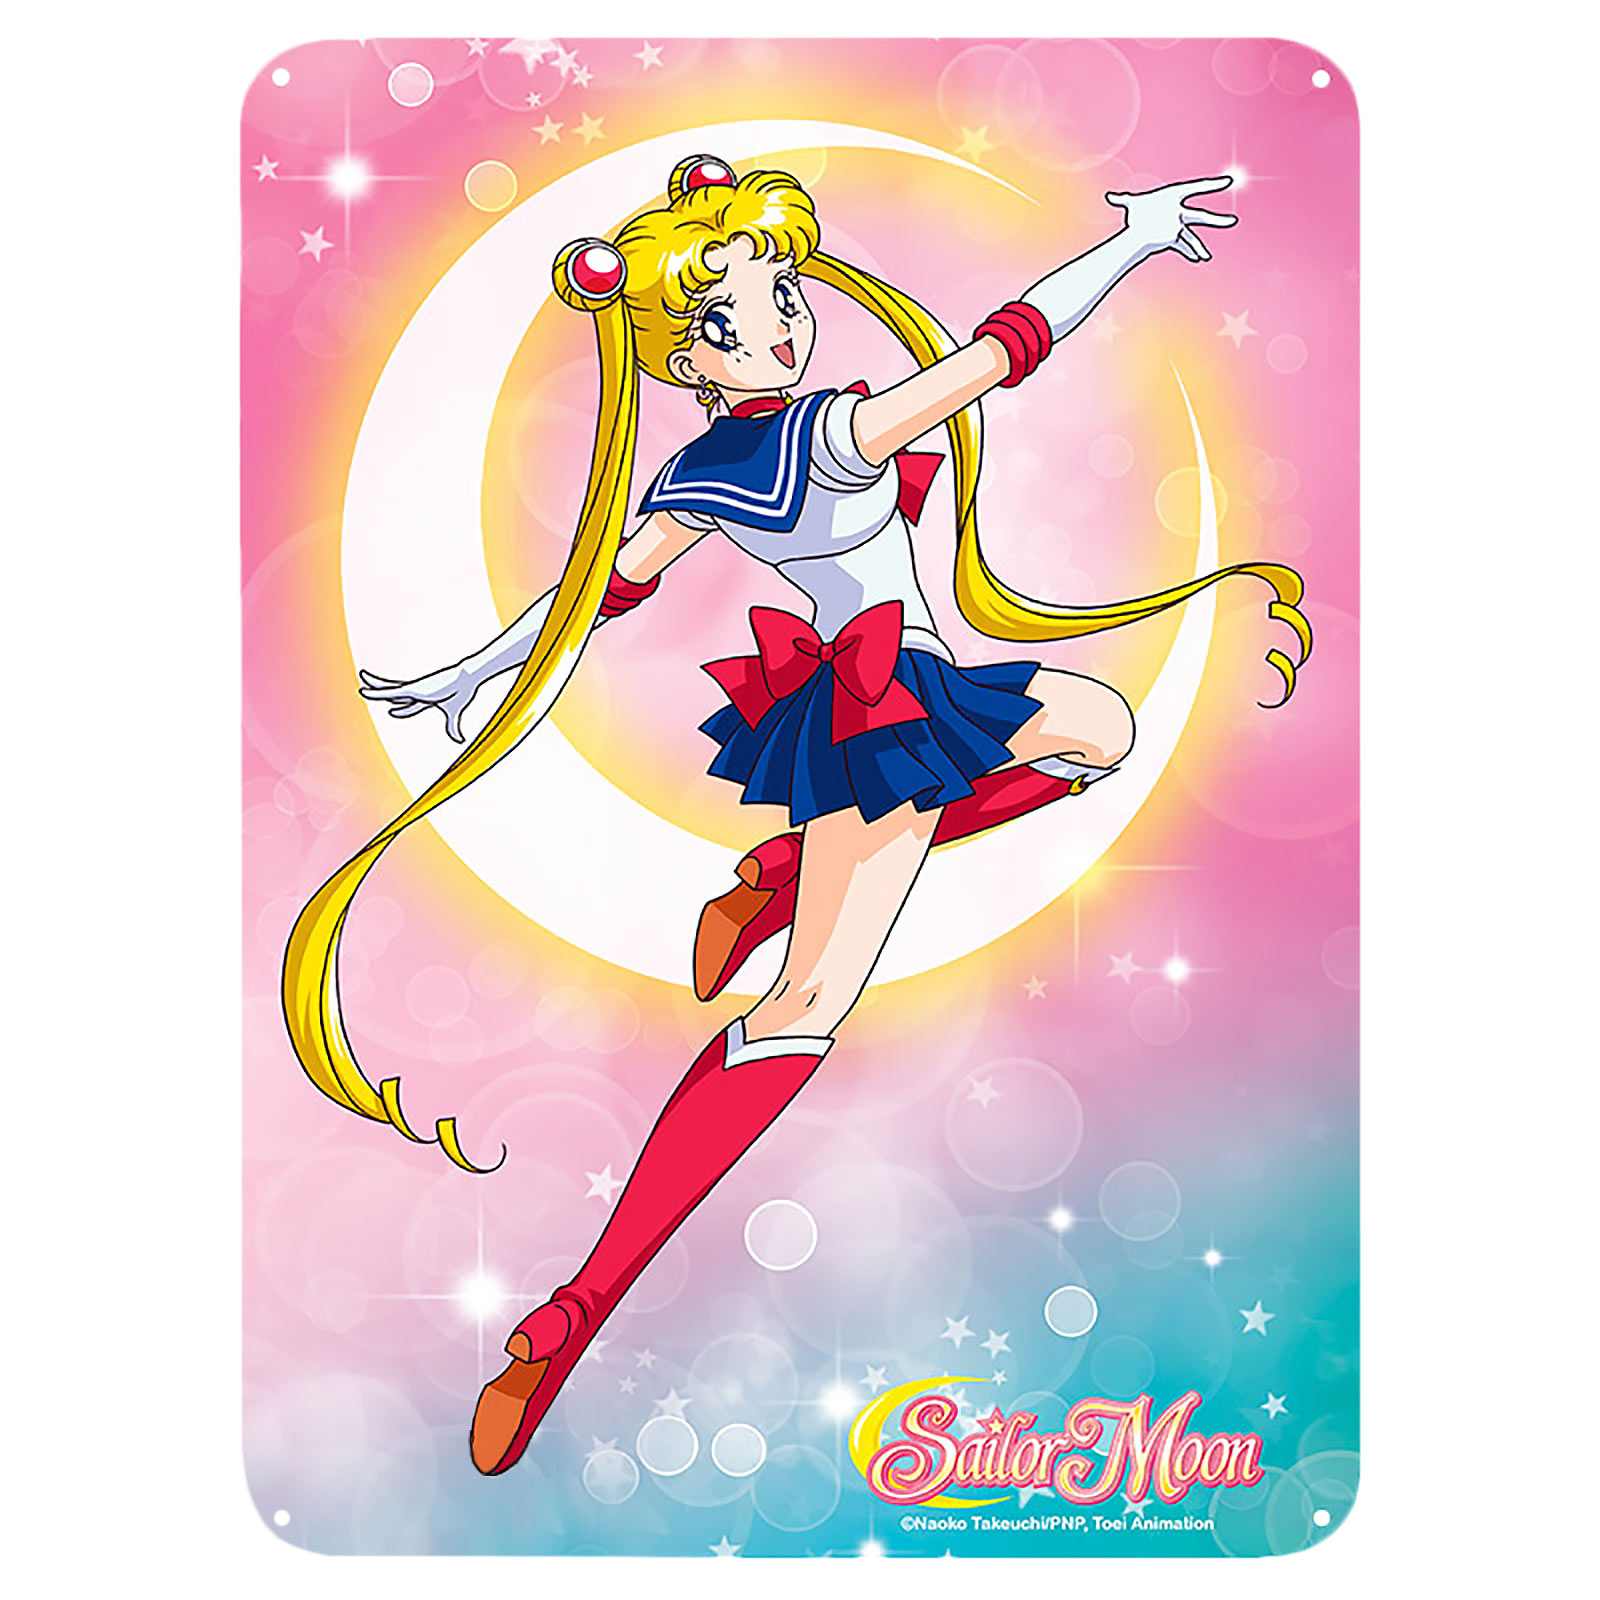 Sailor Moon Shield